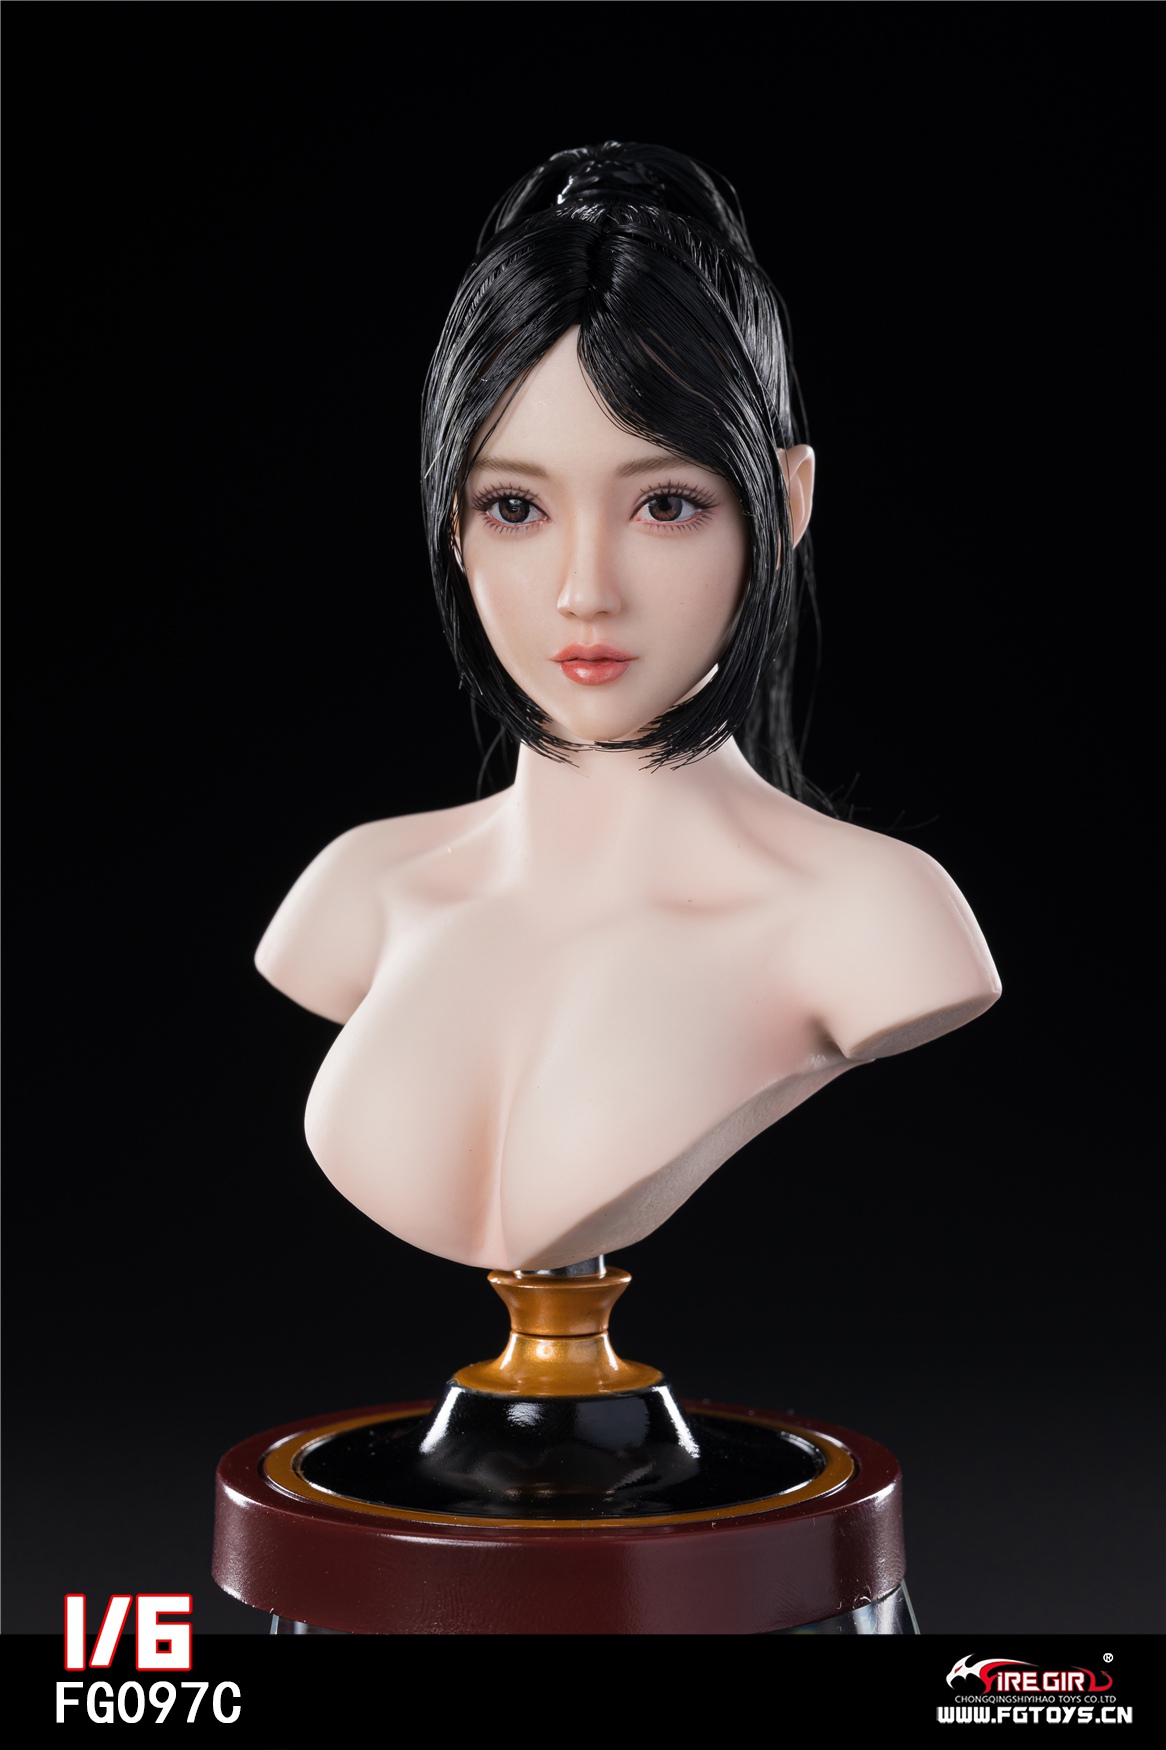 Headsculpt - NEW PRODUCT: Fire Girl Toys: Asian Girl Head Sculpture (FG097A/FG097B/FG097C) 1749